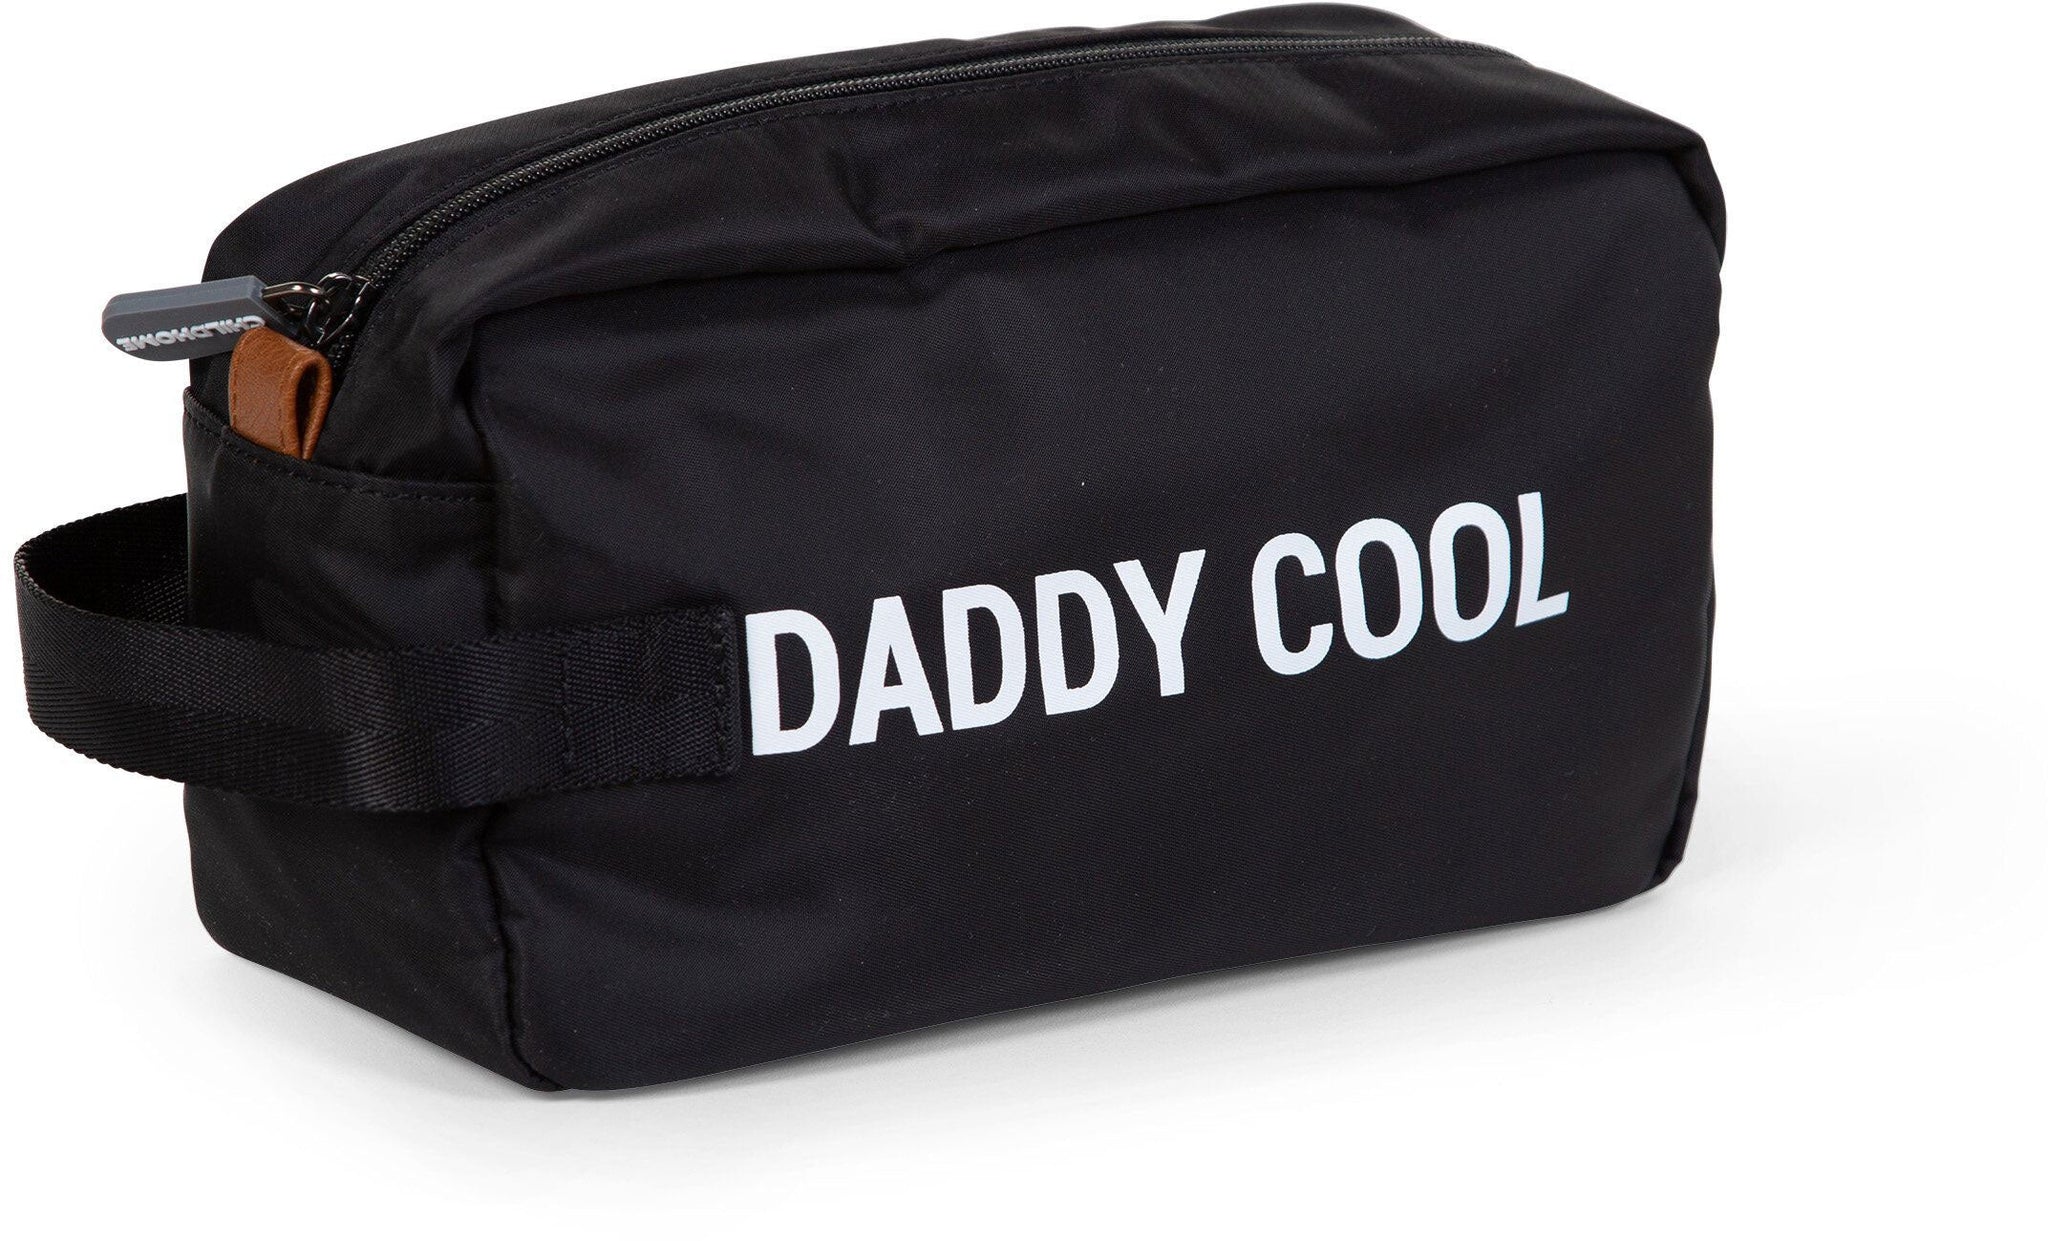 Daddy Cool Toiletries Bag Black - ChildHome